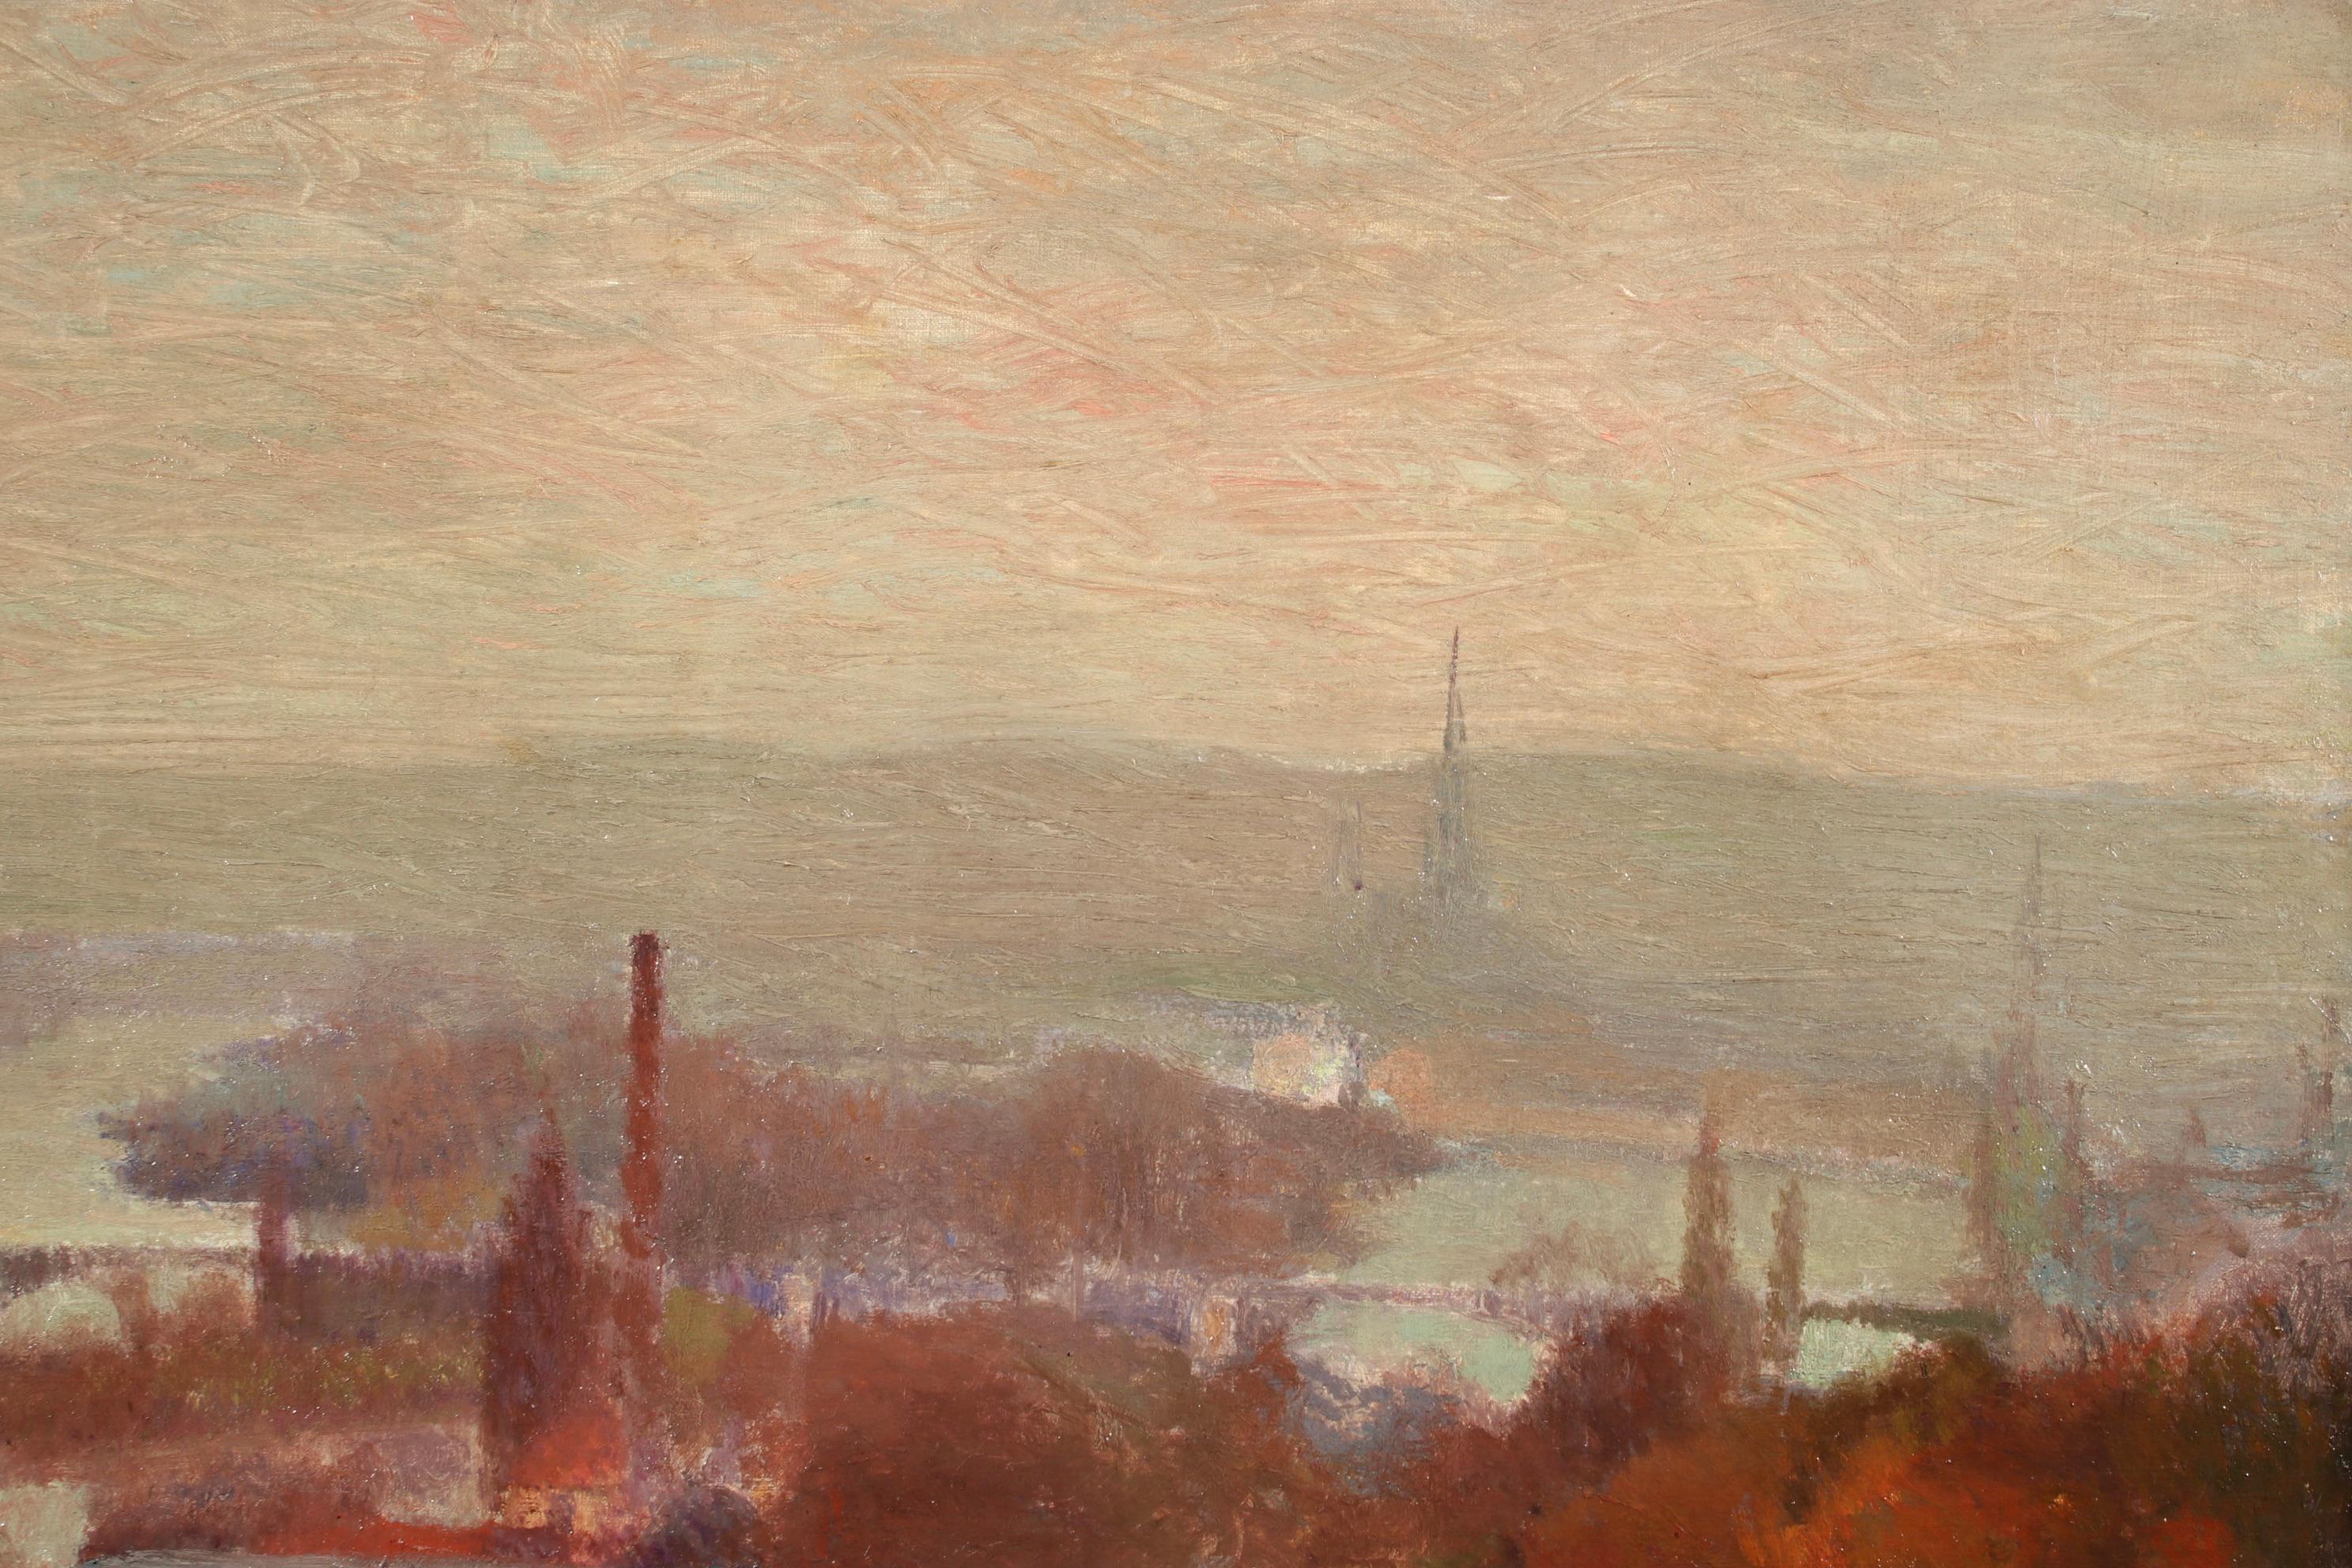 Morning Fog - Rouen - Impressionist Oil, River in Landscape by Joseph Delattre 8